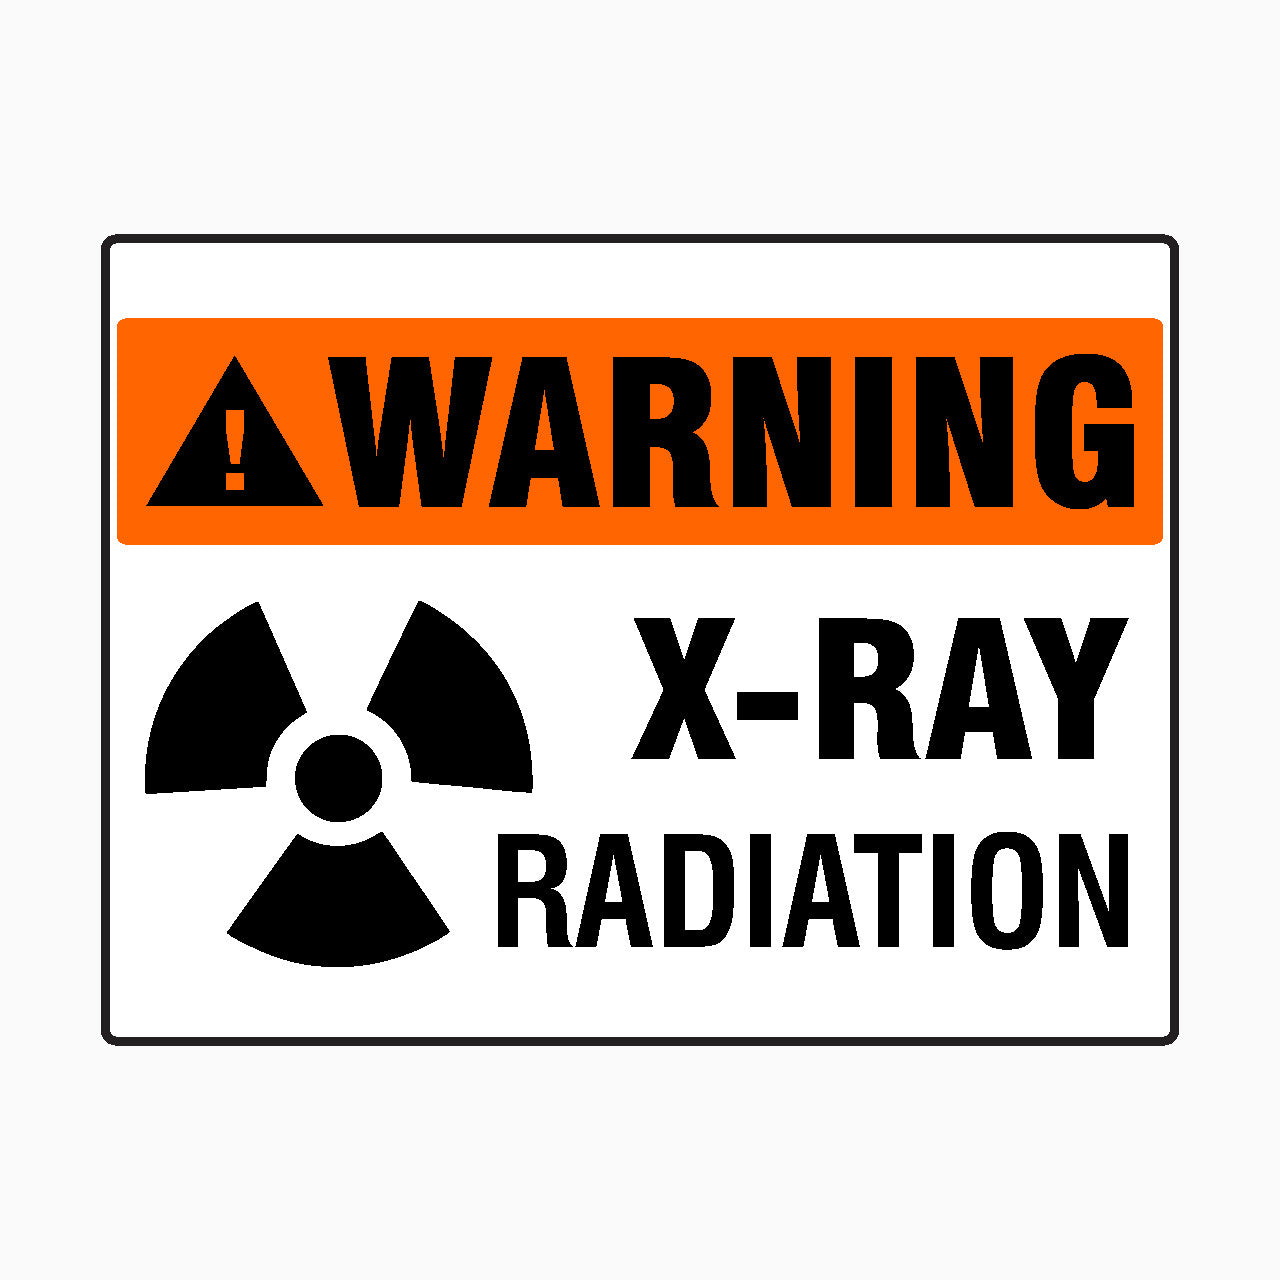 WARNING X - RAY RADIATION SIGN - GET SIGNS